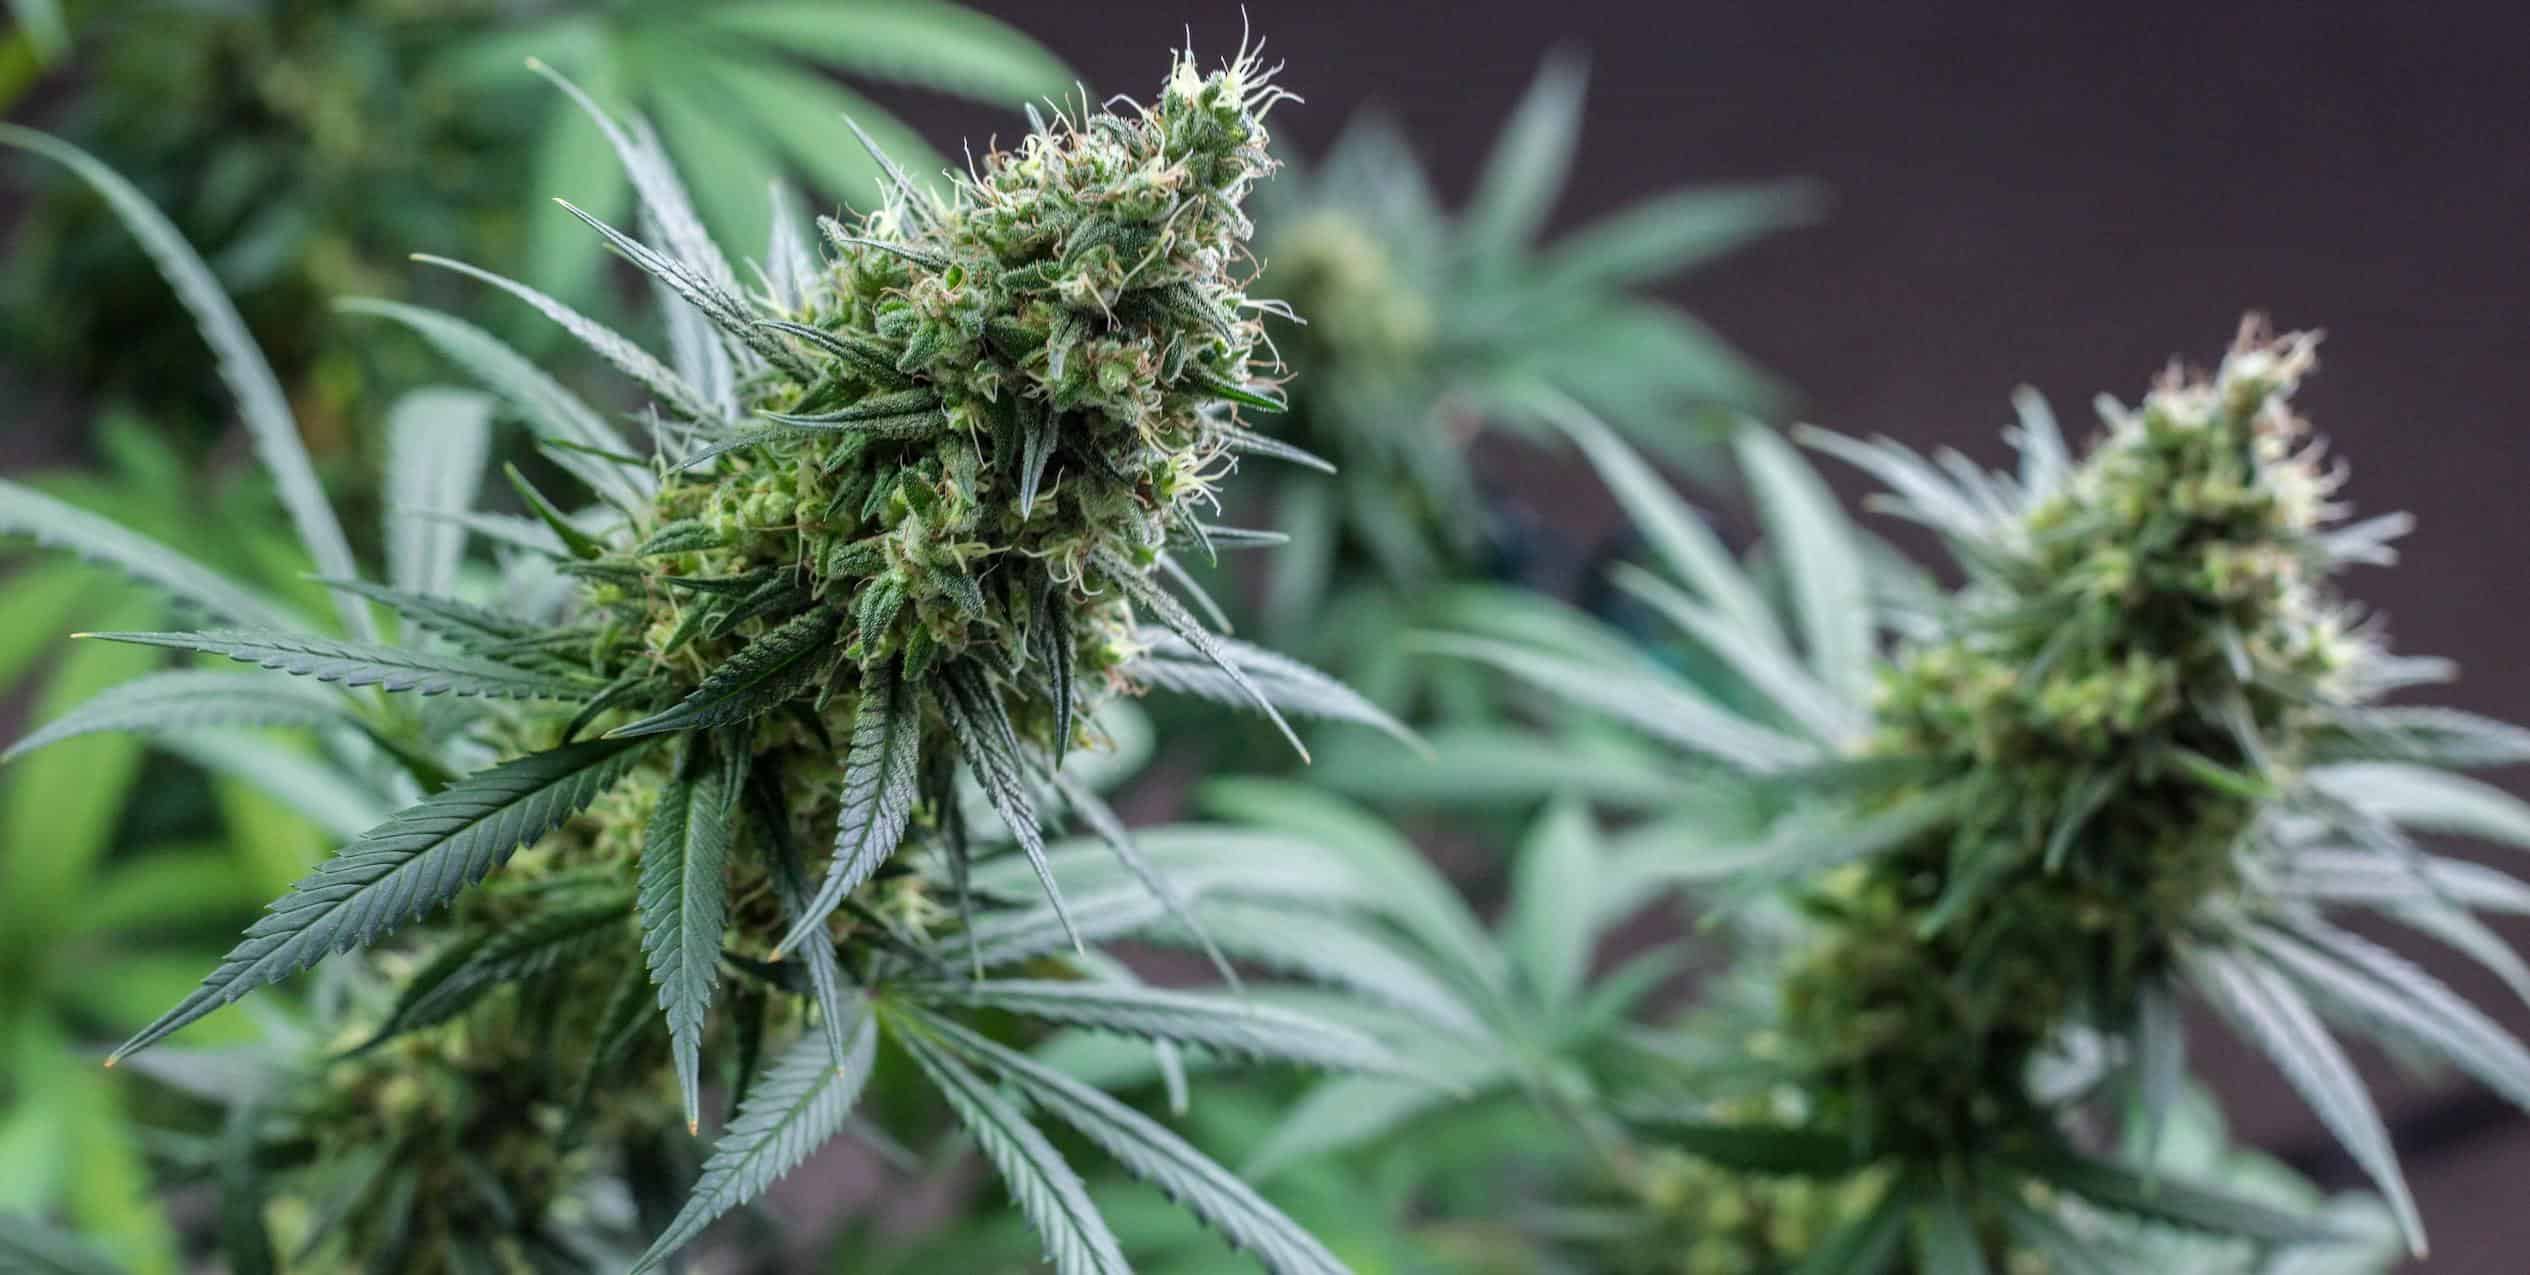 Shelf growing cannabis